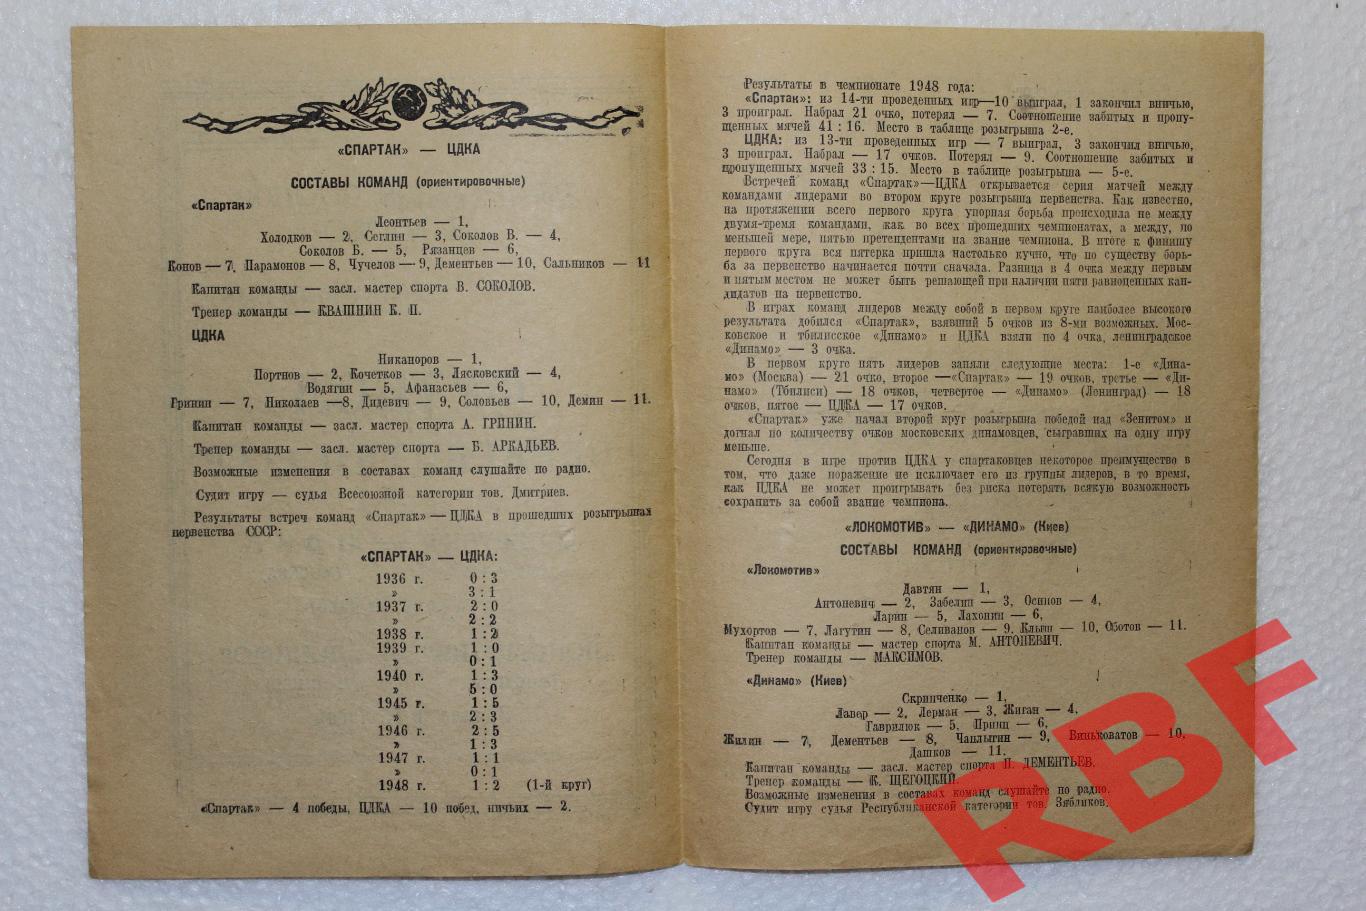 Спартак Москва - ЦДКА Москва ,Локомотив Москва - Динамо Киев,26 июля 1948 2